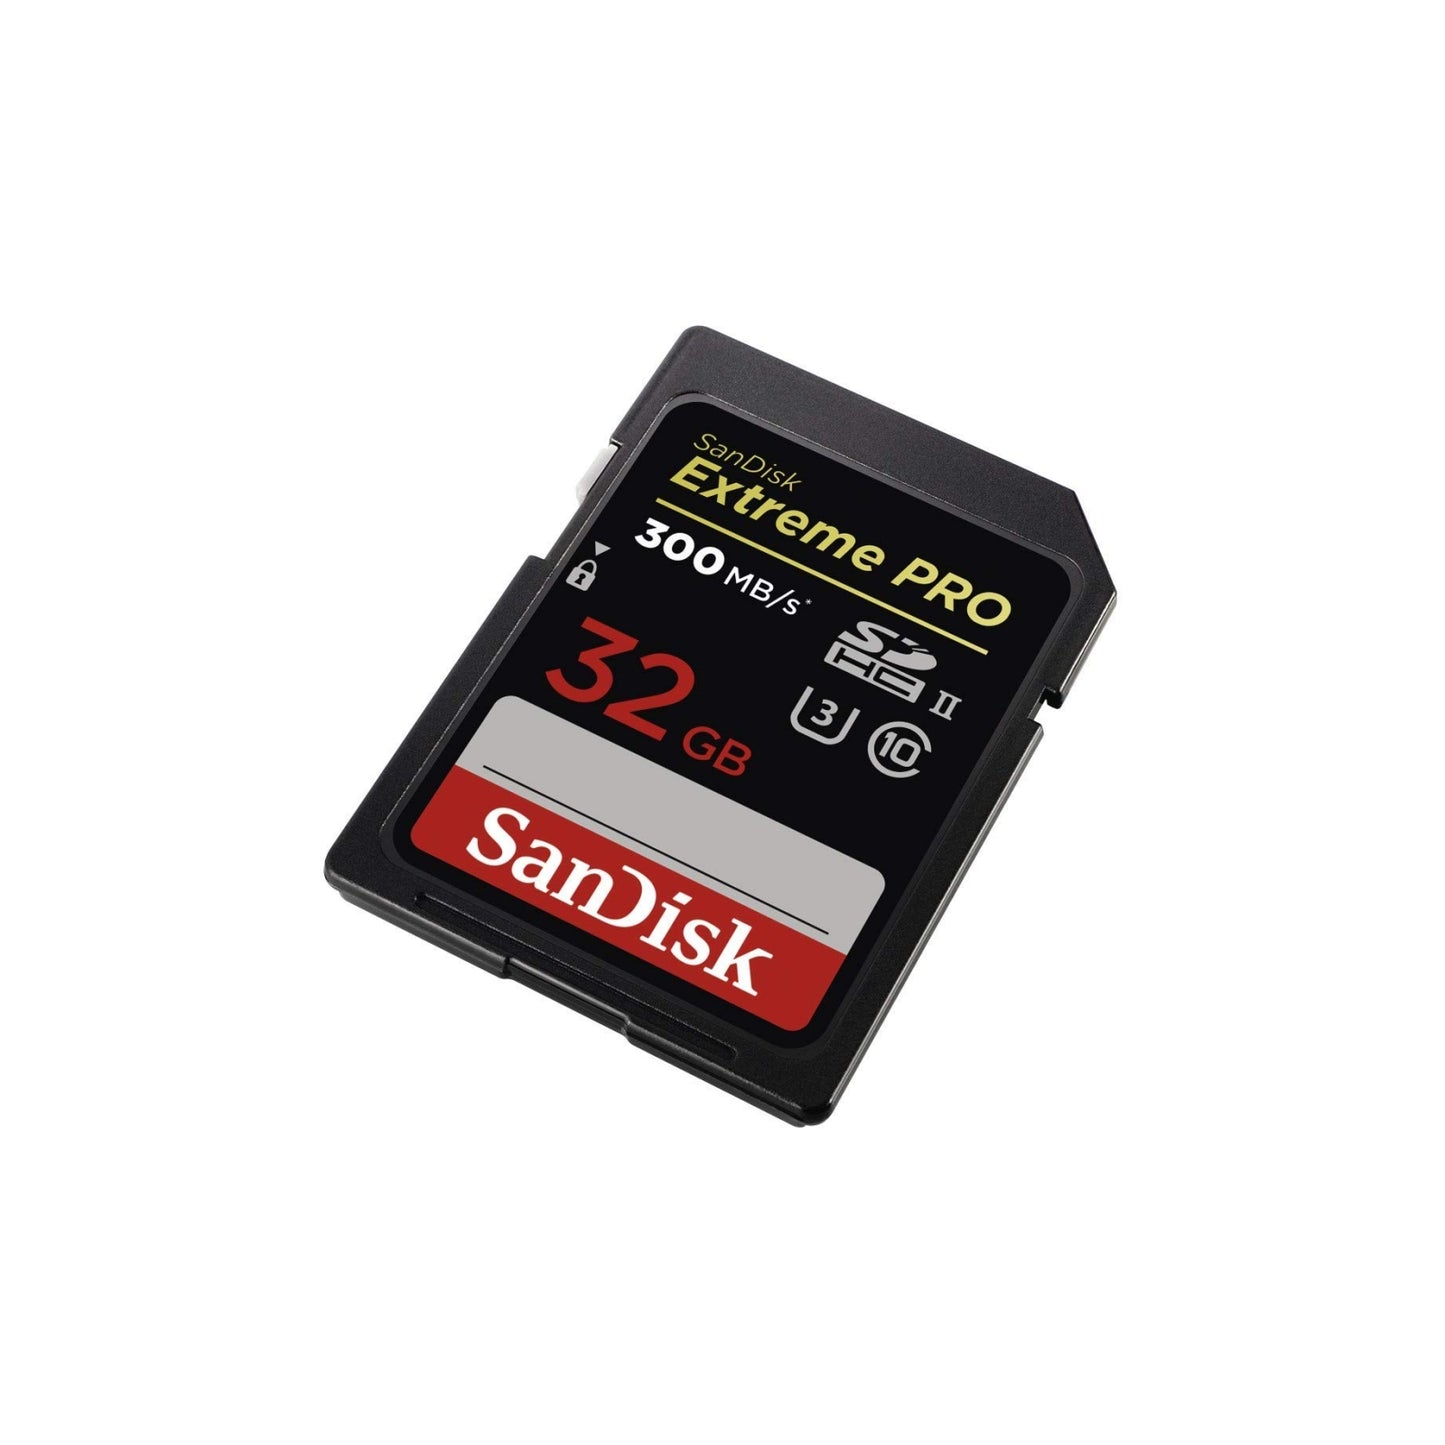 SanDisk Extreme Pro 32GB SDHC U3 300MB/S SD Camera Memory TF Card DSLR 4K Video